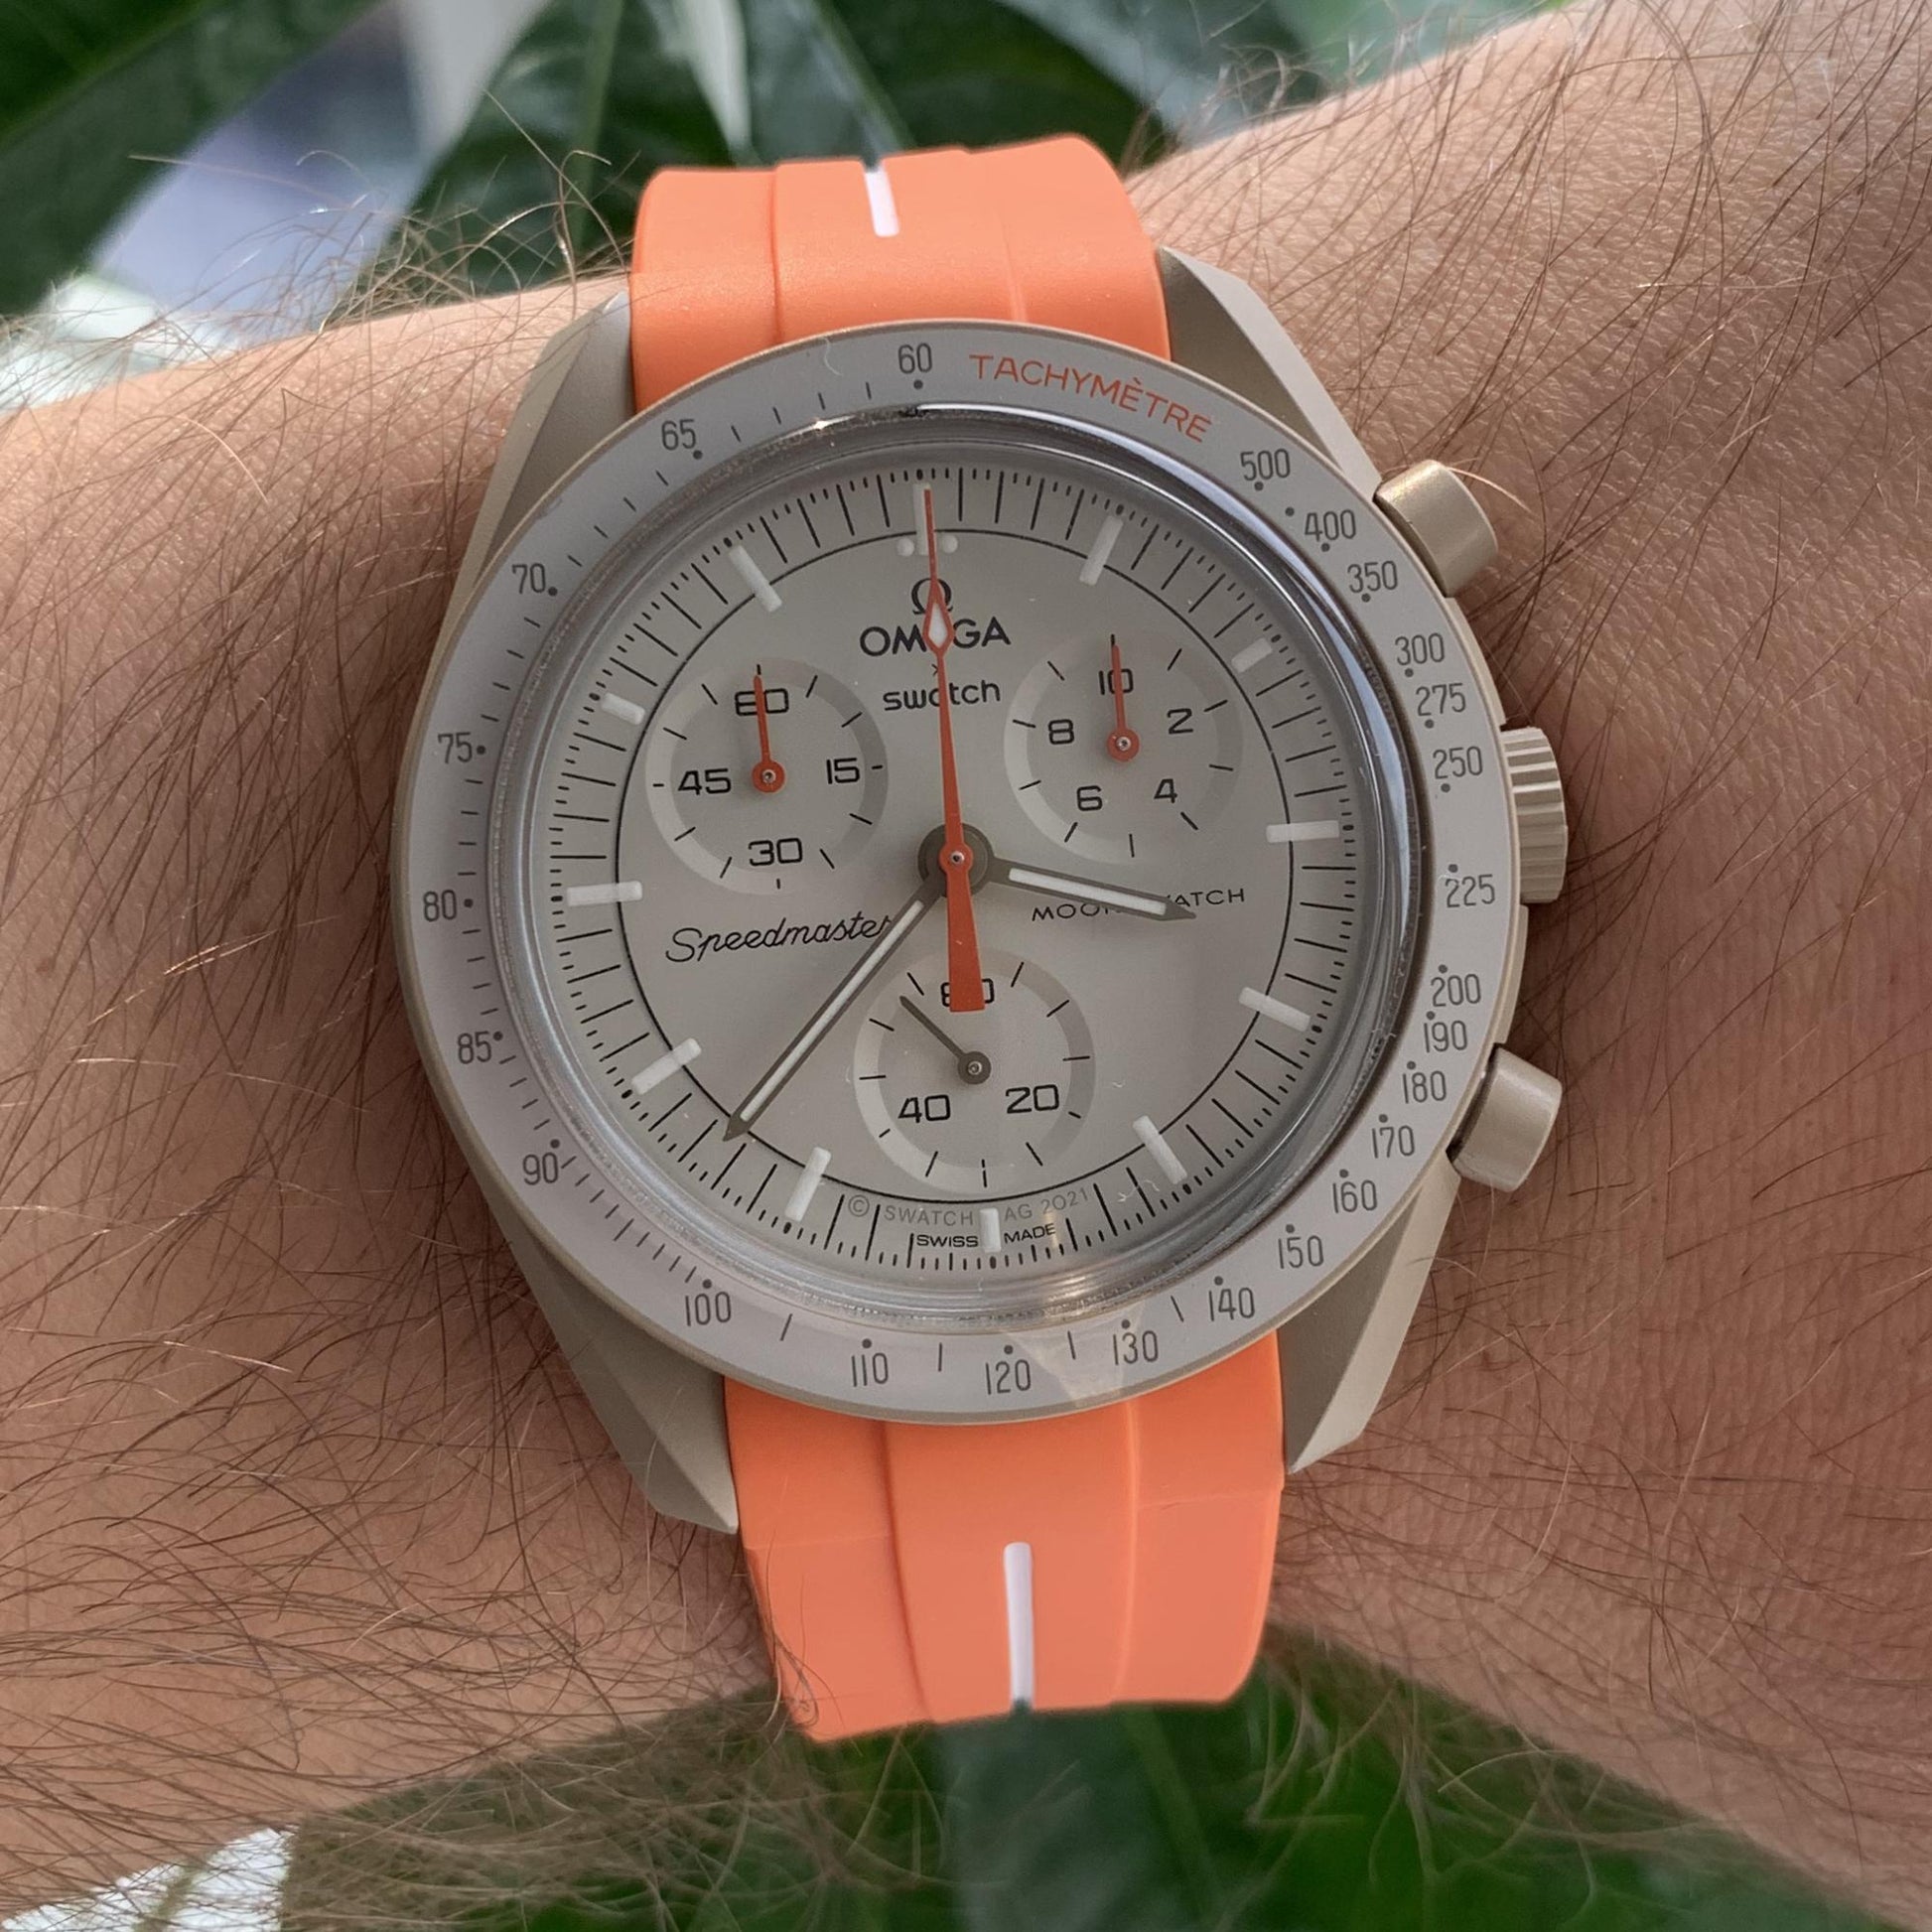 MoonSwatch strap orange and white